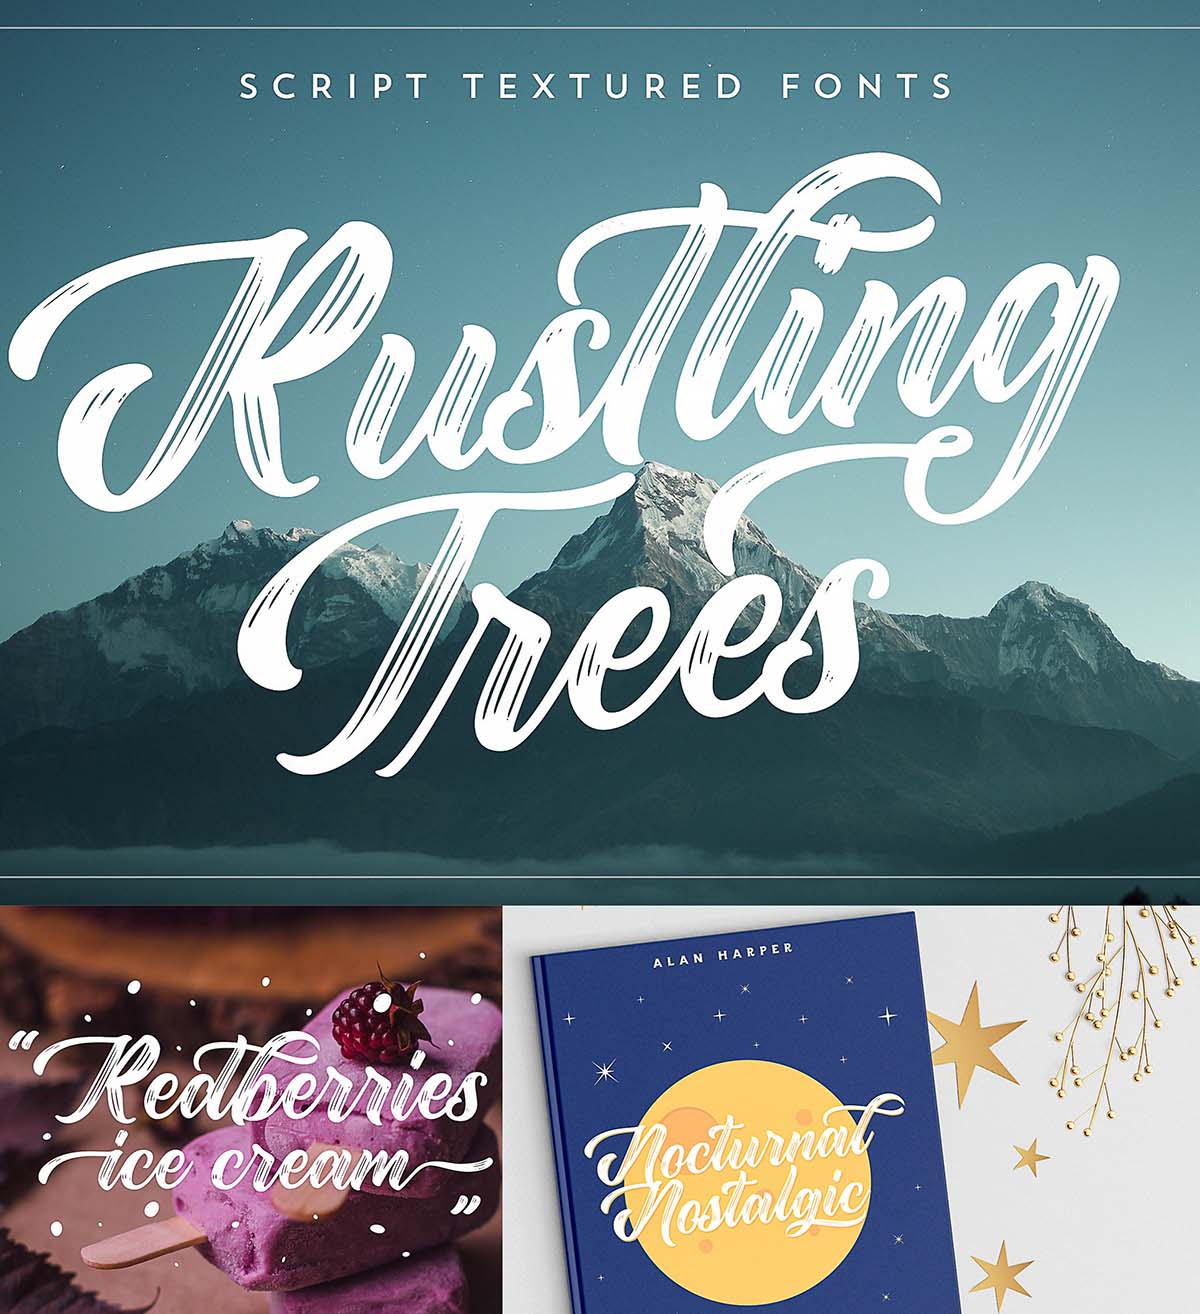 Rustling trees